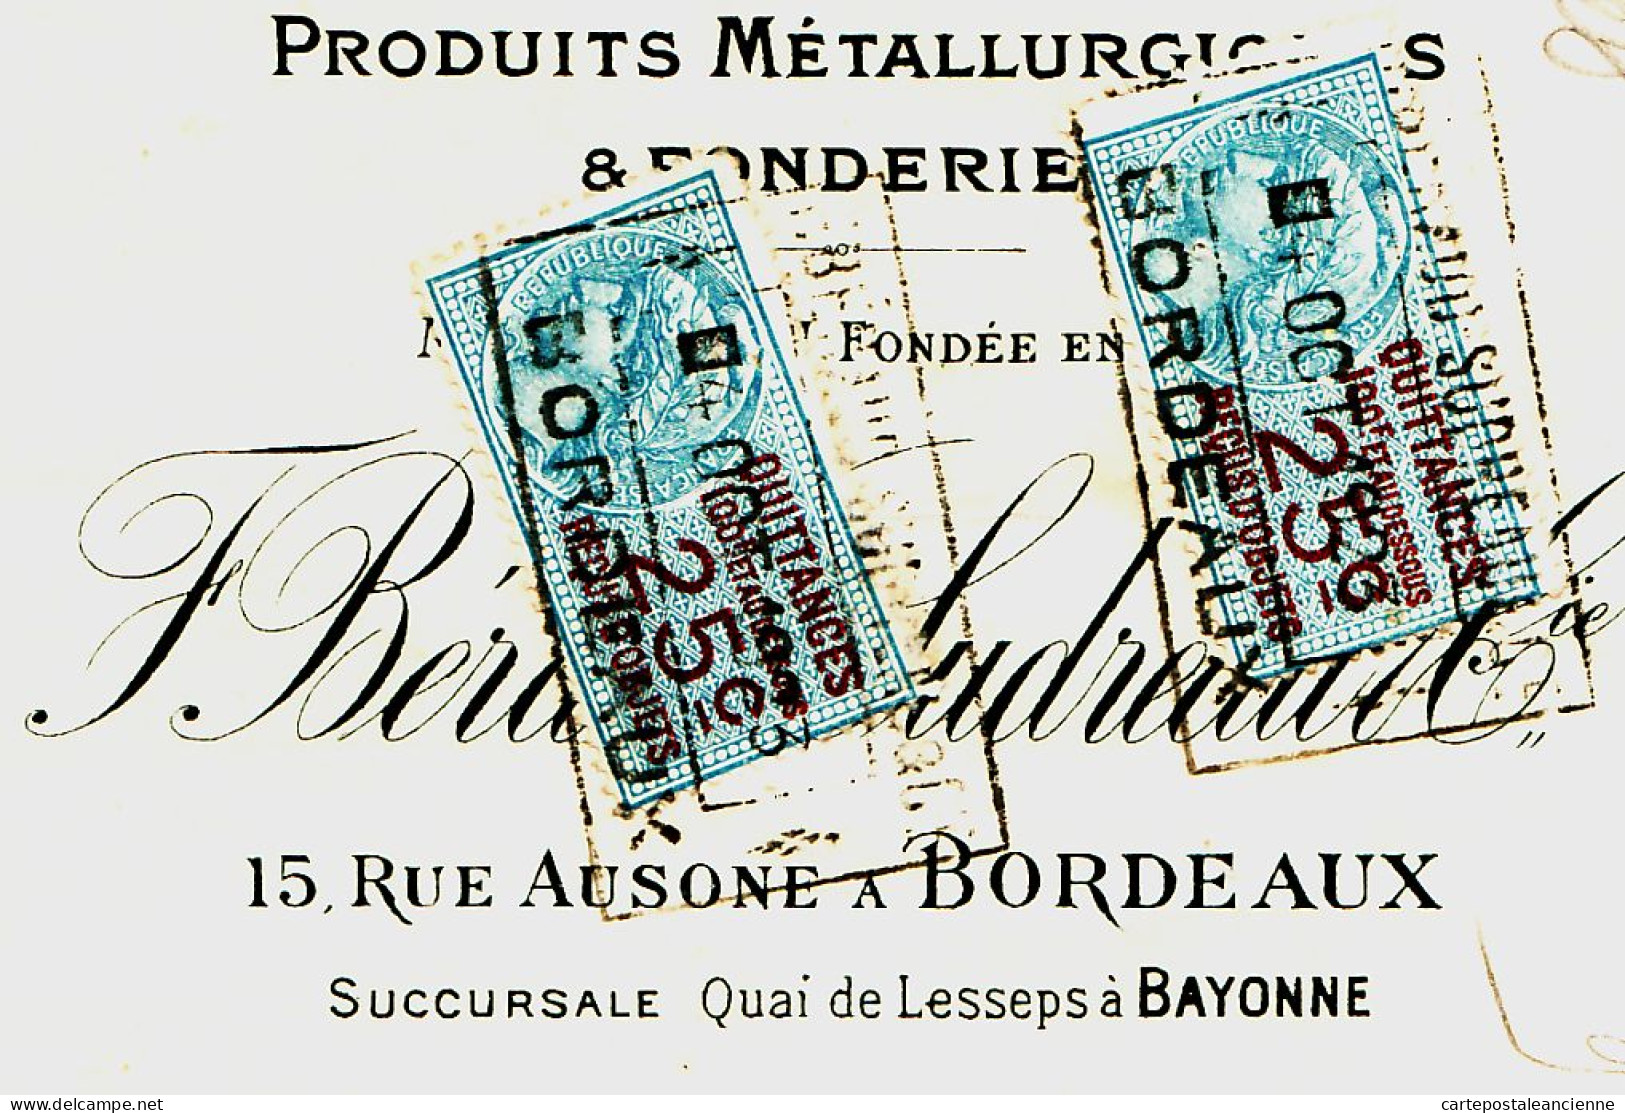 31282 / BORDEAUX Produits Metallurgiques Fonderie BERAUD SUDREAU Rue Aussone Reçu Quittance-Timbre Fiscal BESSE CABROL - Wissels